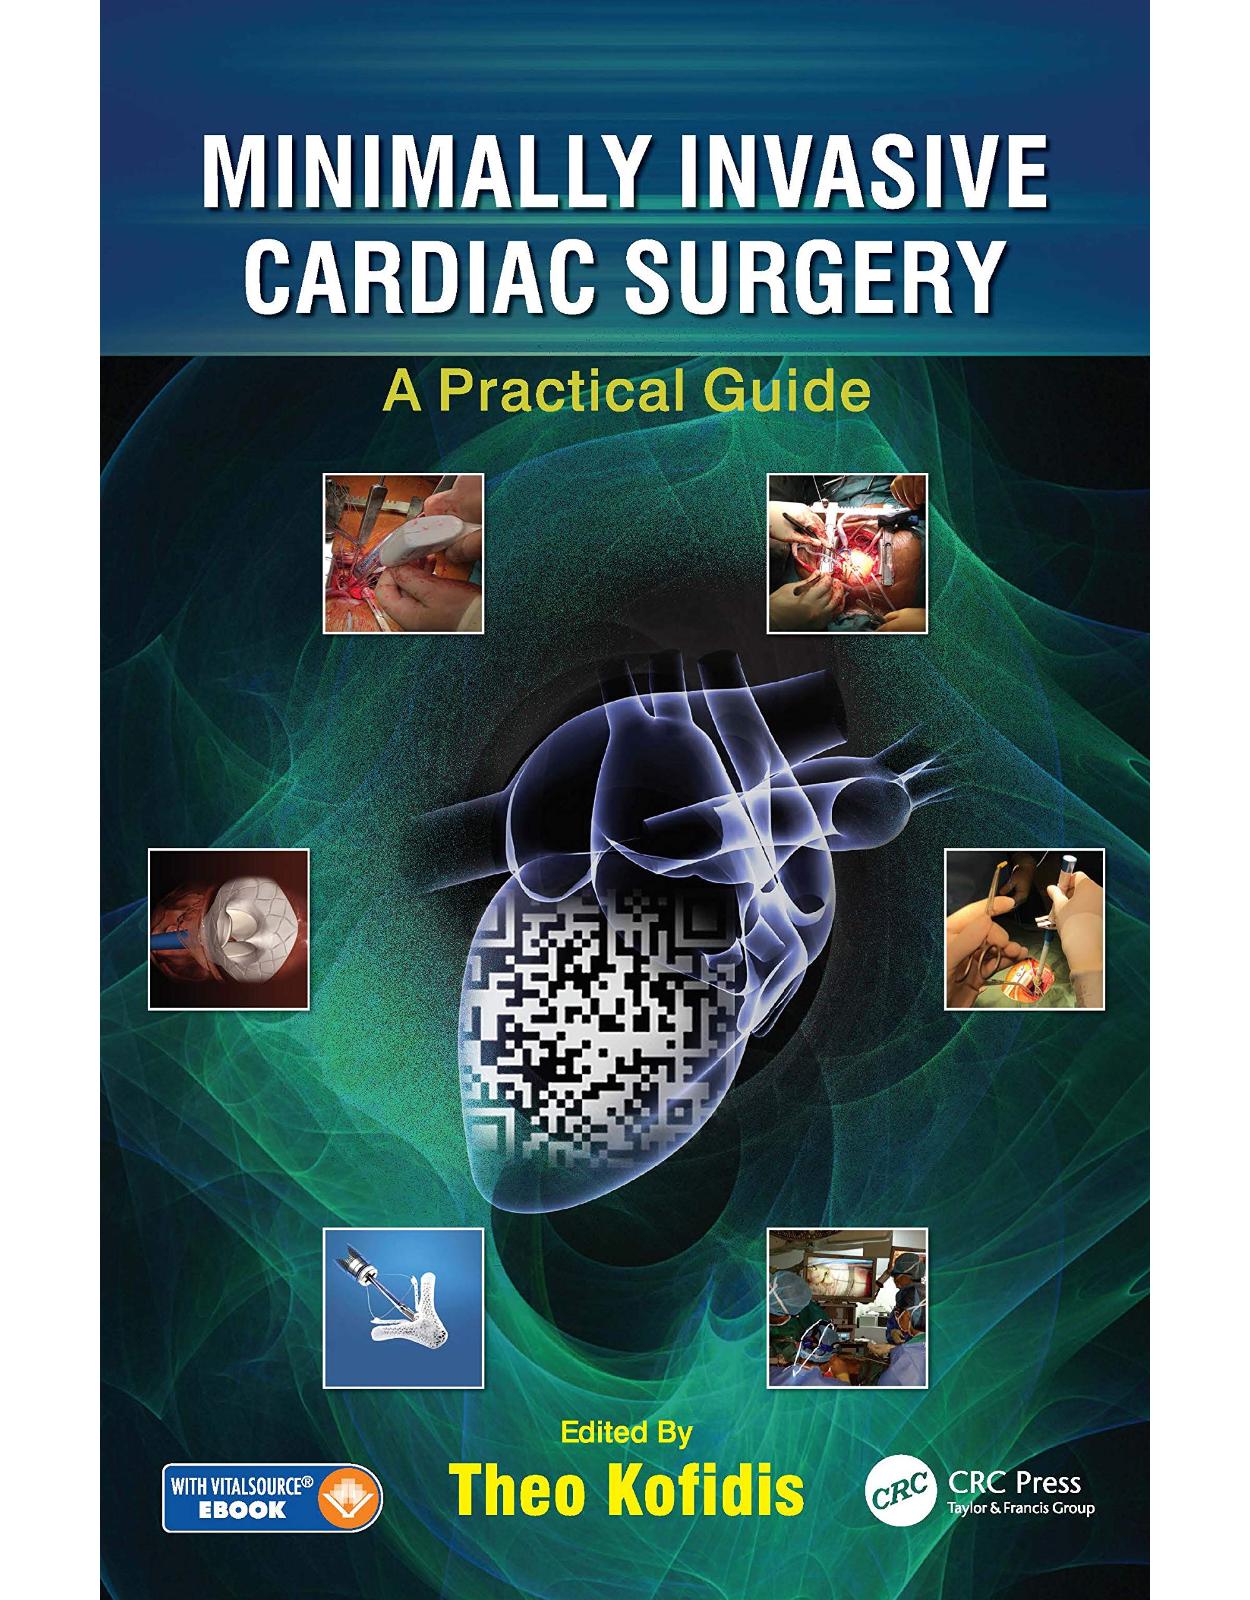 Minimally Invasive Cardiac Surgery: A Practical Guide